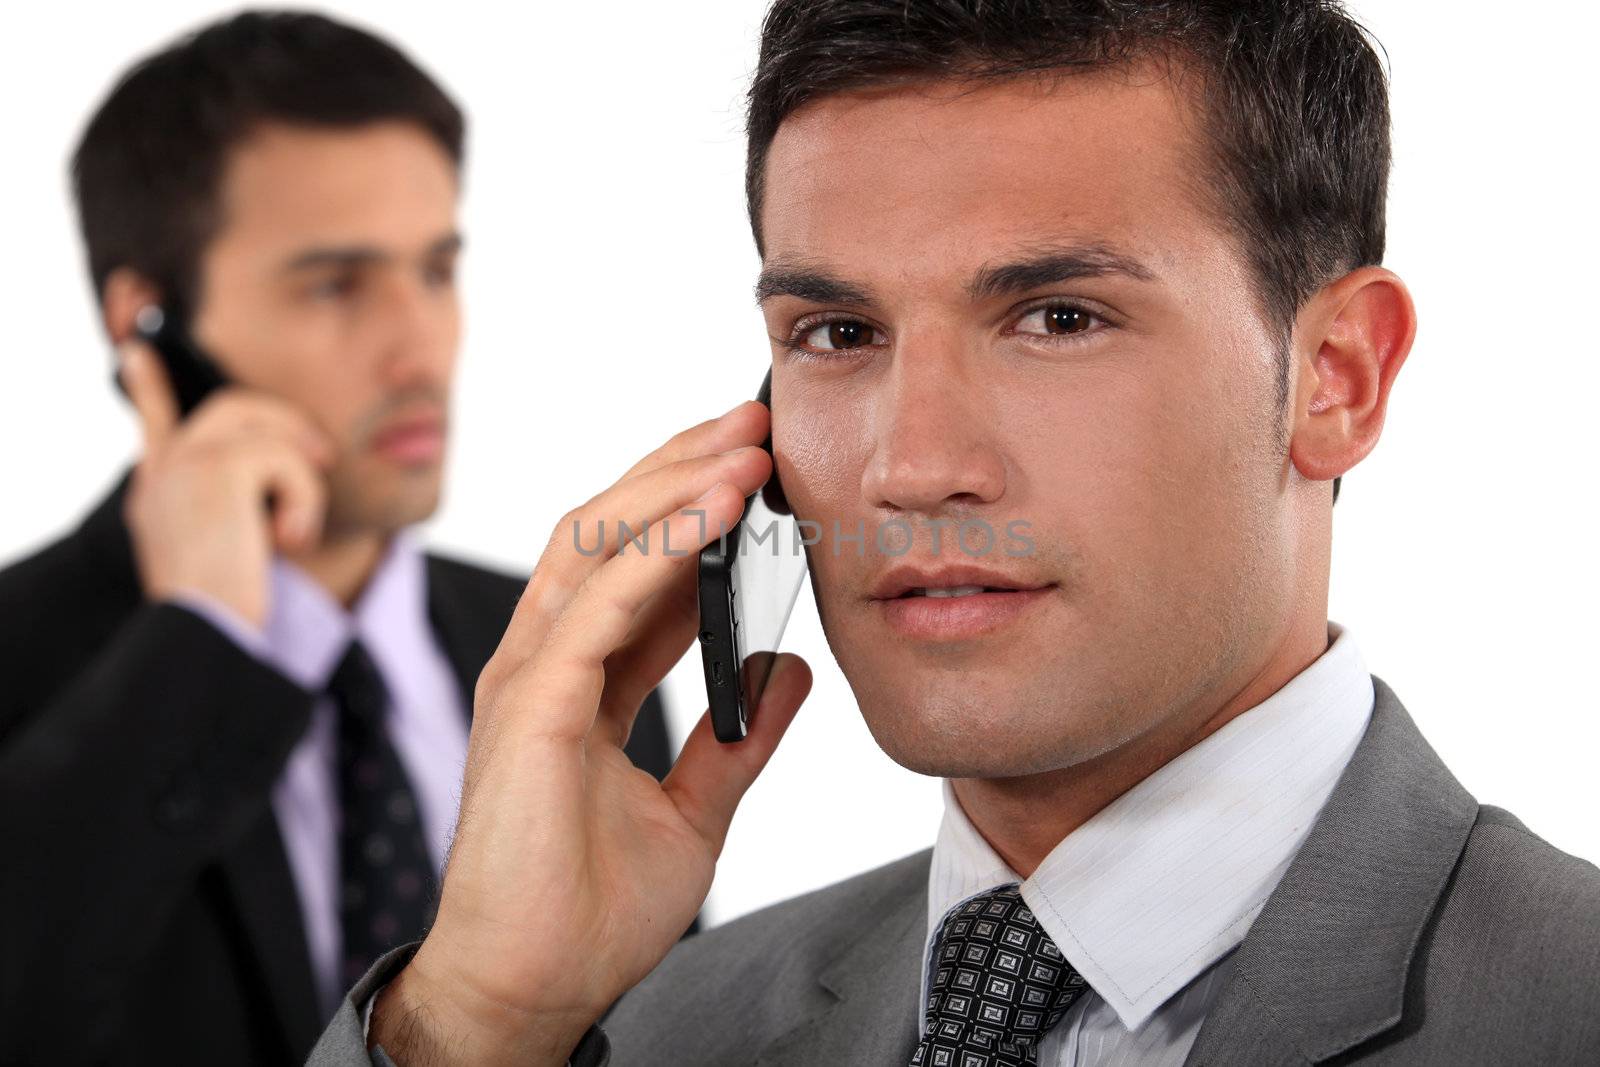 Businessmen talking on their mobile phones by phovoir